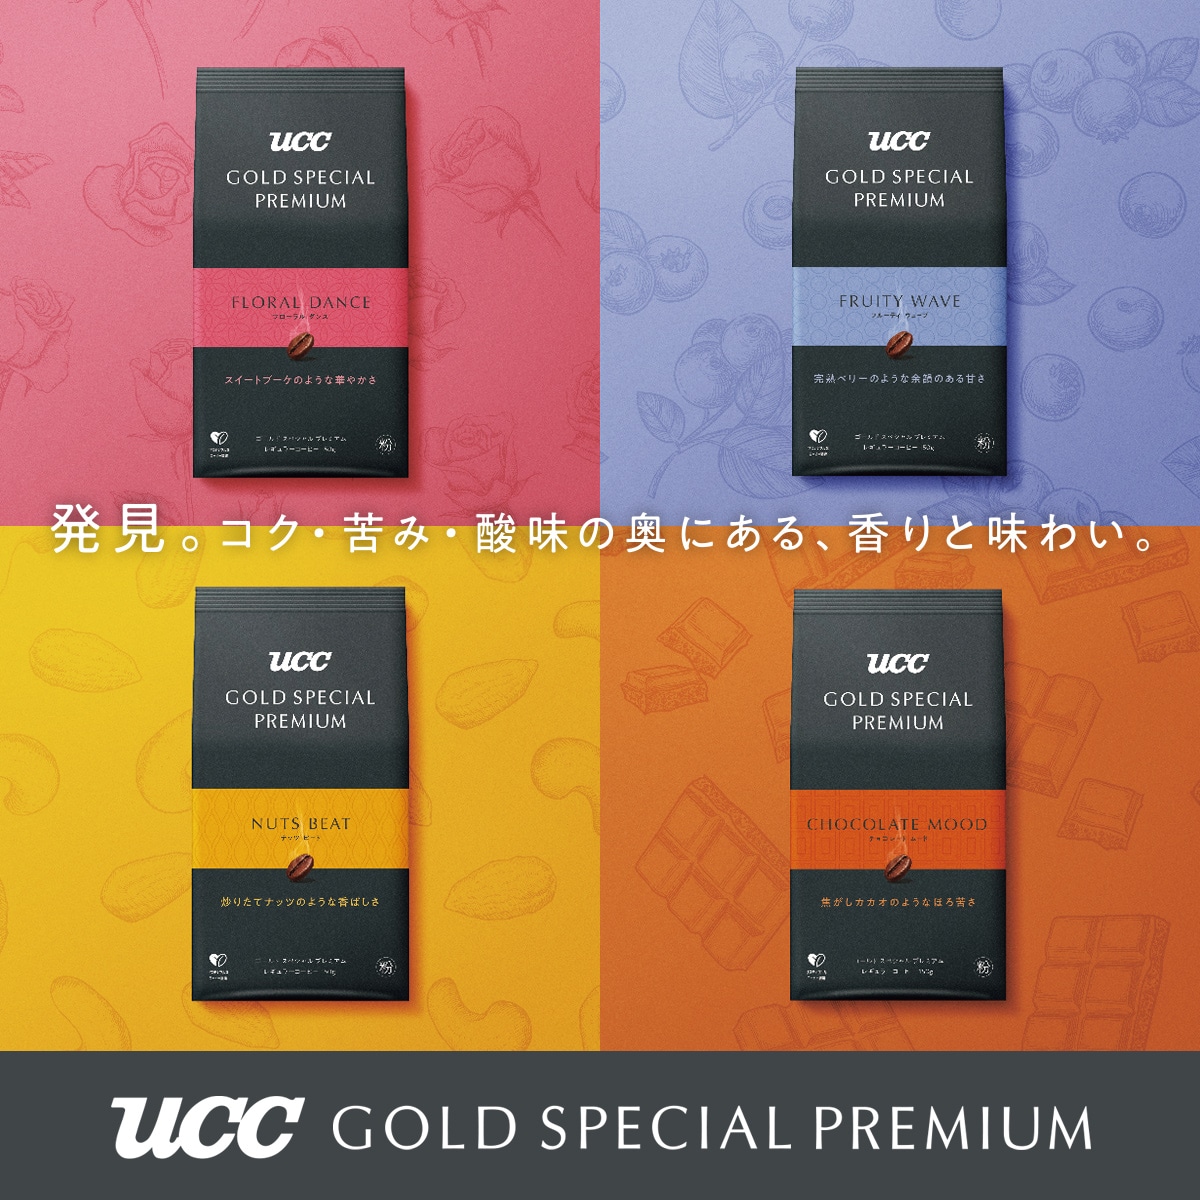 UCC GOLD SPECIAL PREMIUM 炒り豆 チョコレートムード 150g（豆）